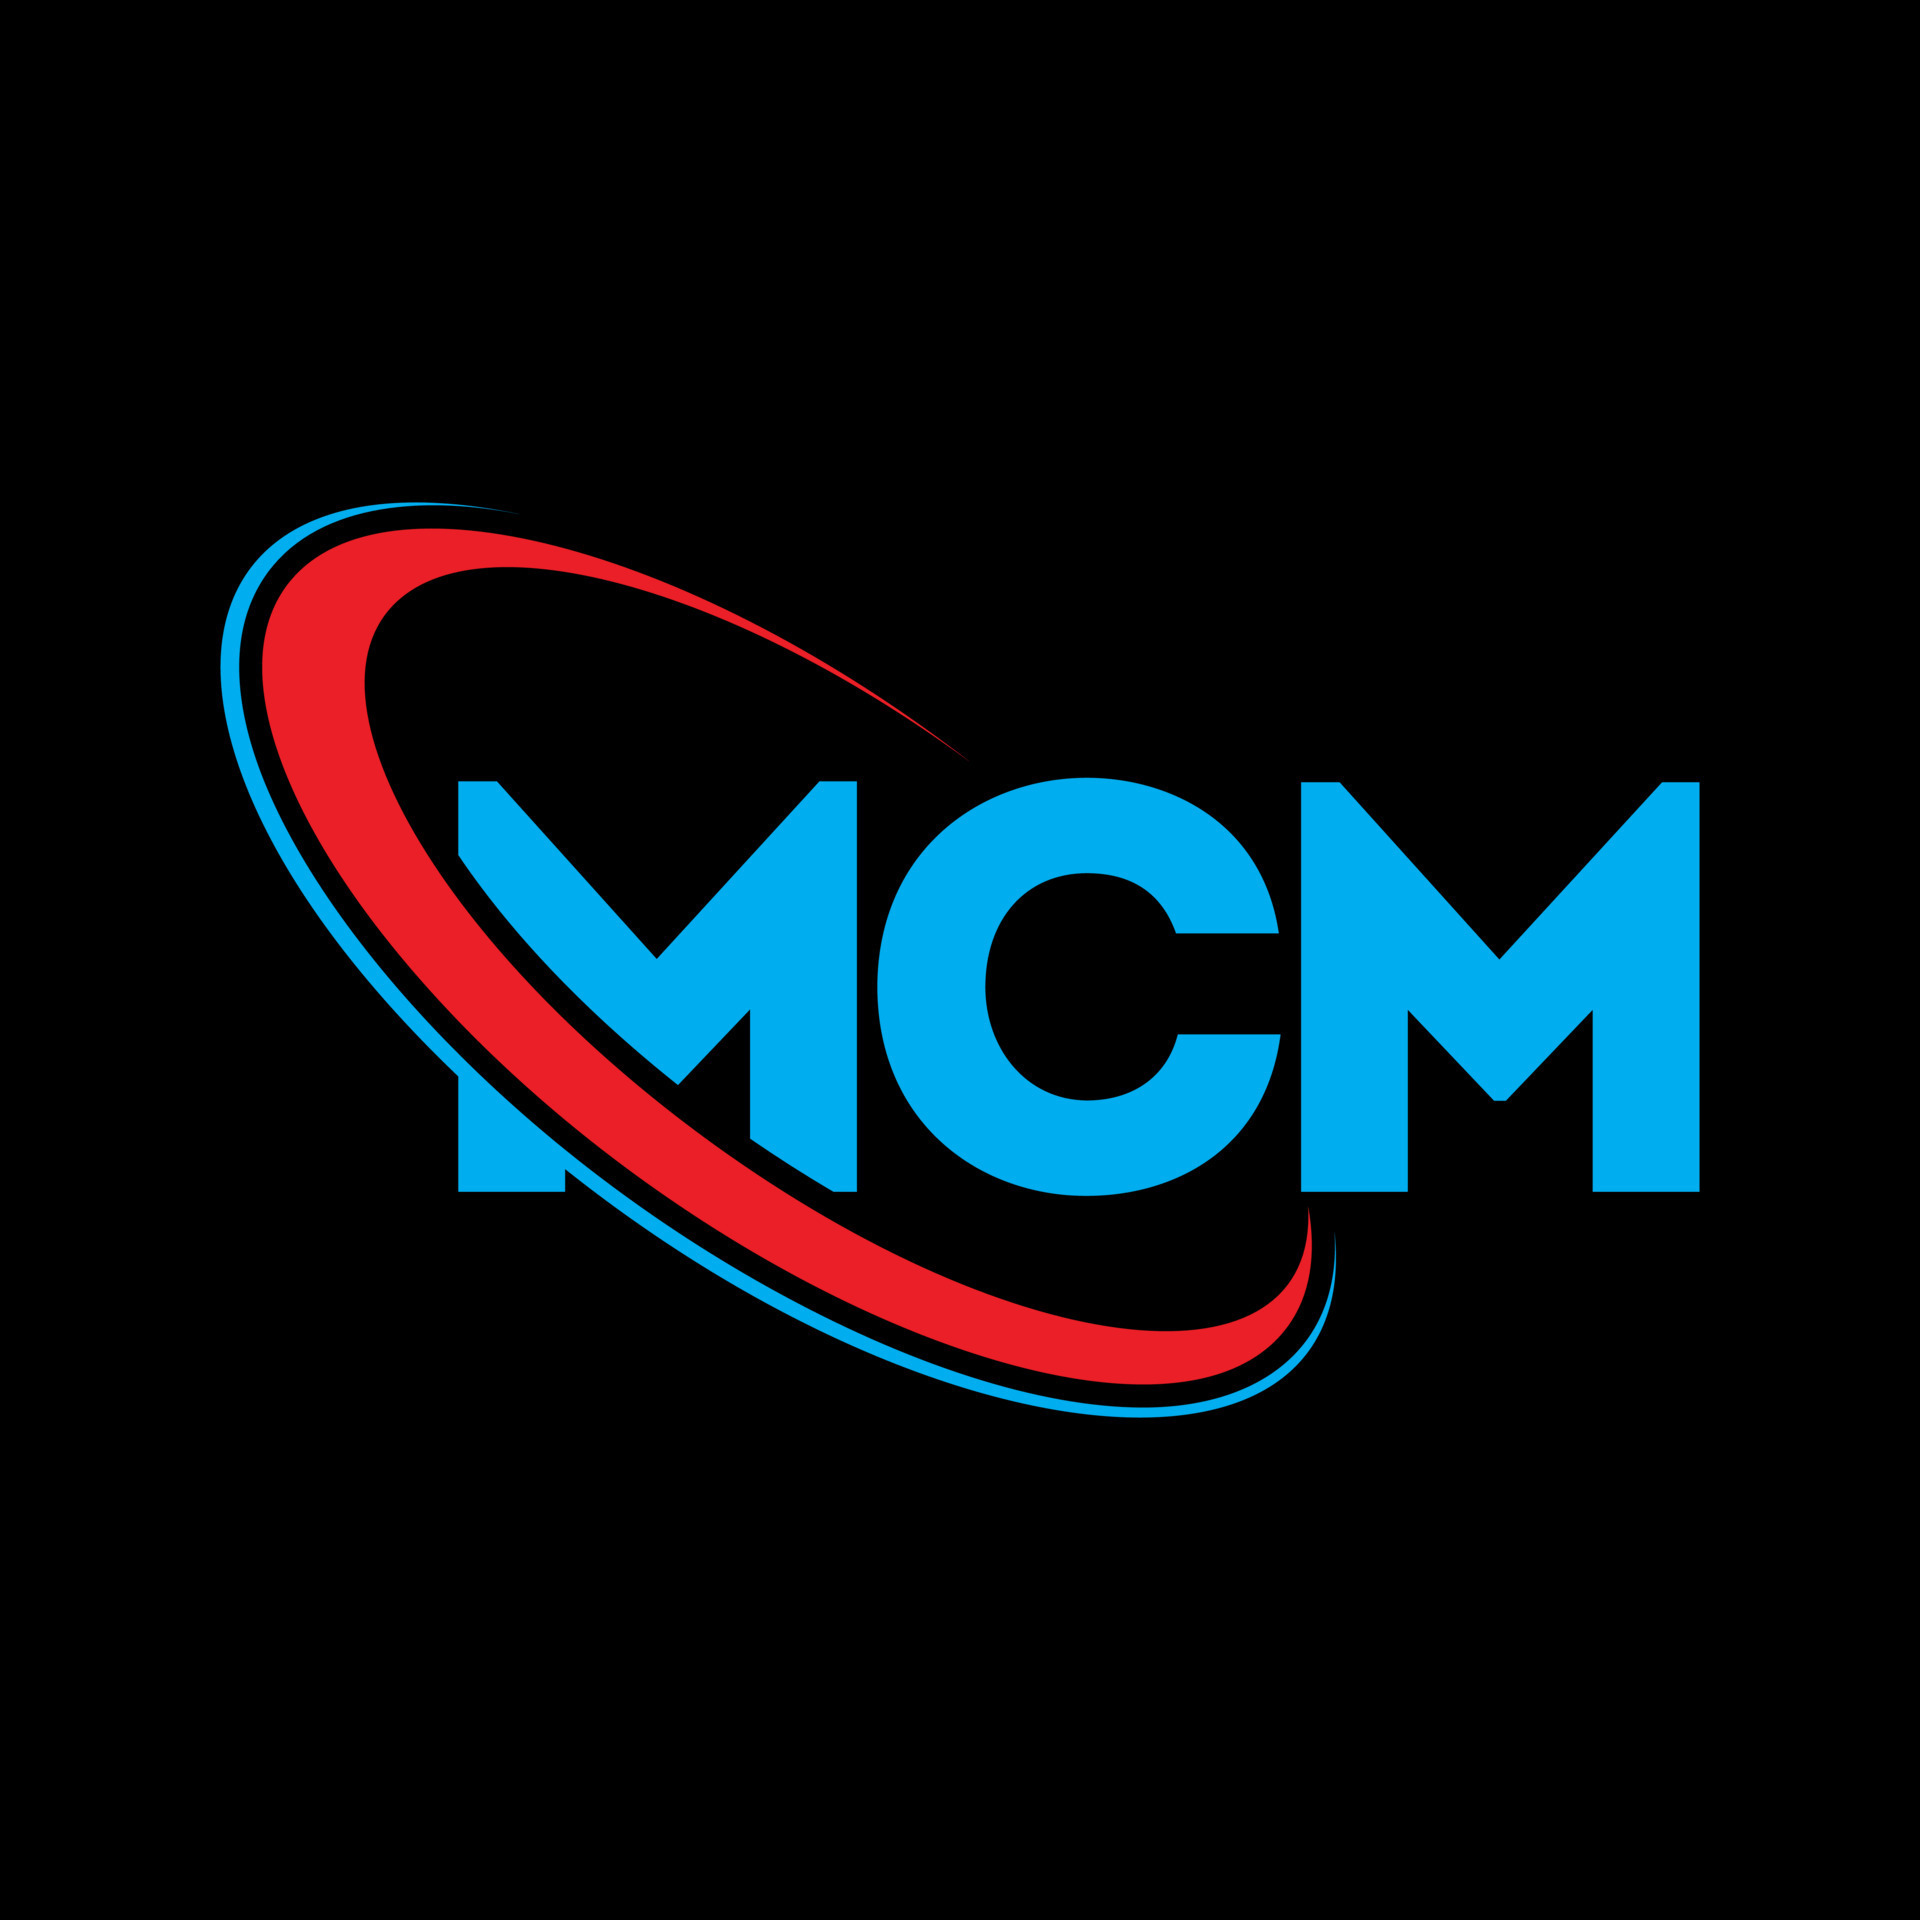 MCM letter logo design in illustration. Vector logo, calligraphy designs  for logo, Poster, Invitation, etc. 14609236 Vector Art at Vecteezy